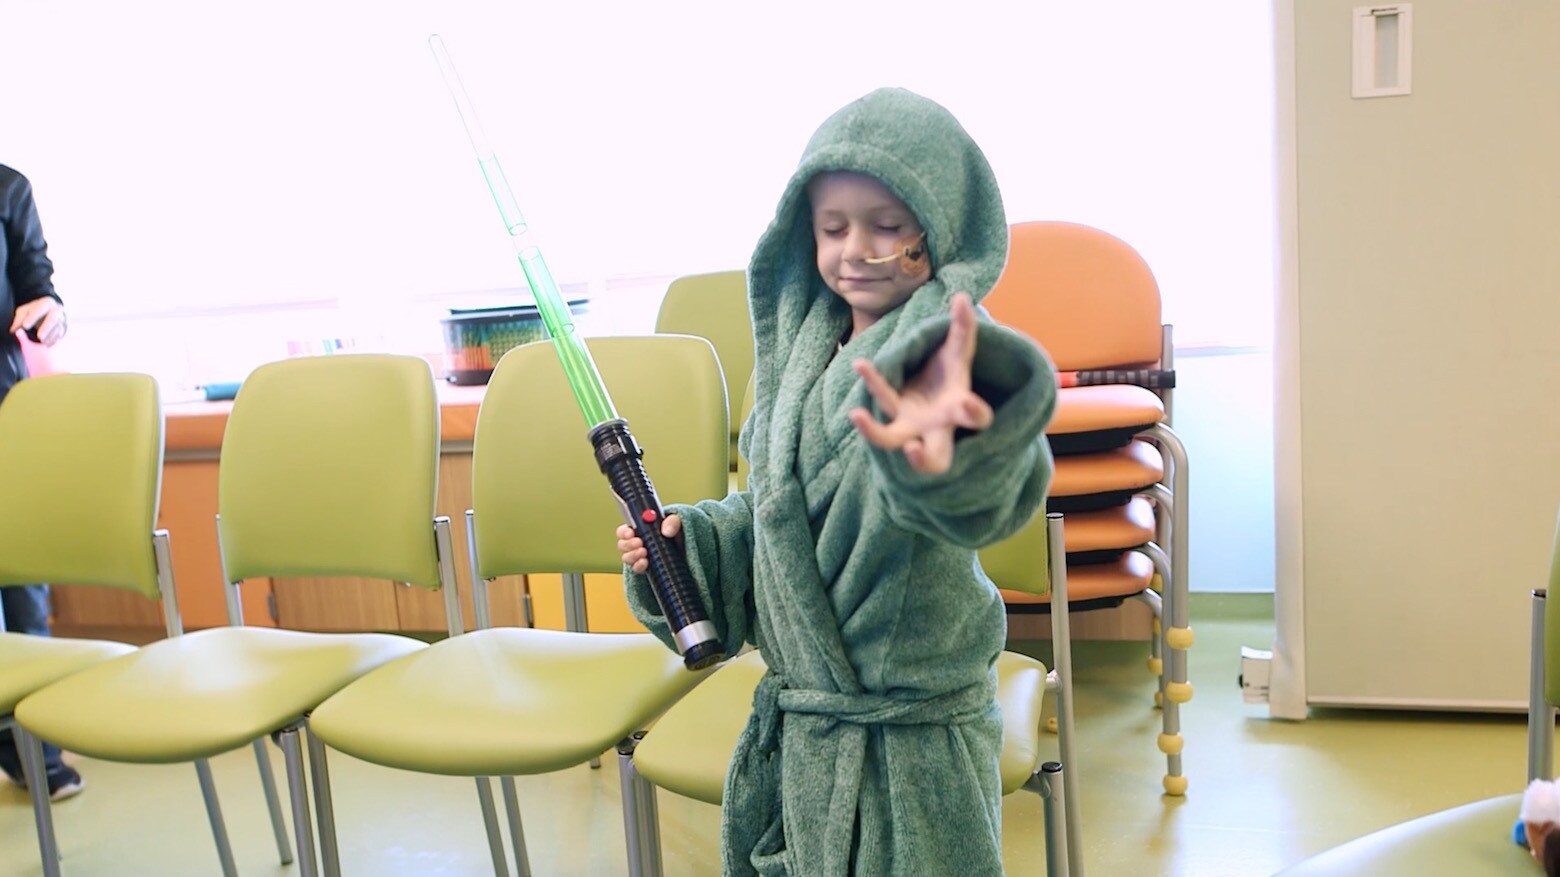 Star Wars Day at UCSF Benioff Children’s Hospital